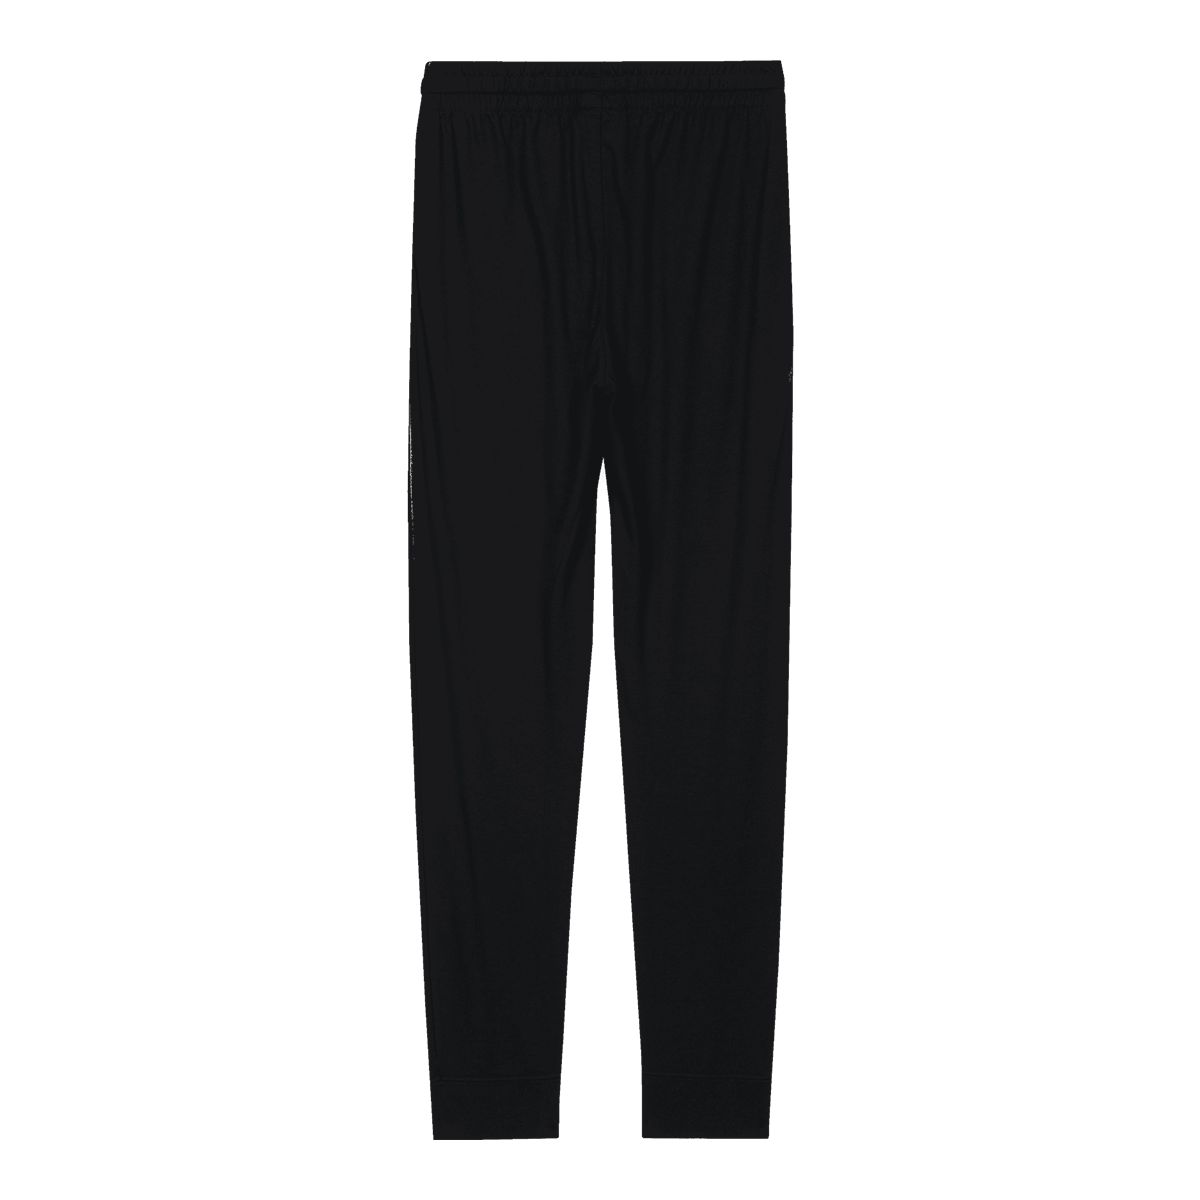 Nike Track Pants Youth Girls Sportswear Lightweight Woven Black Large or XL